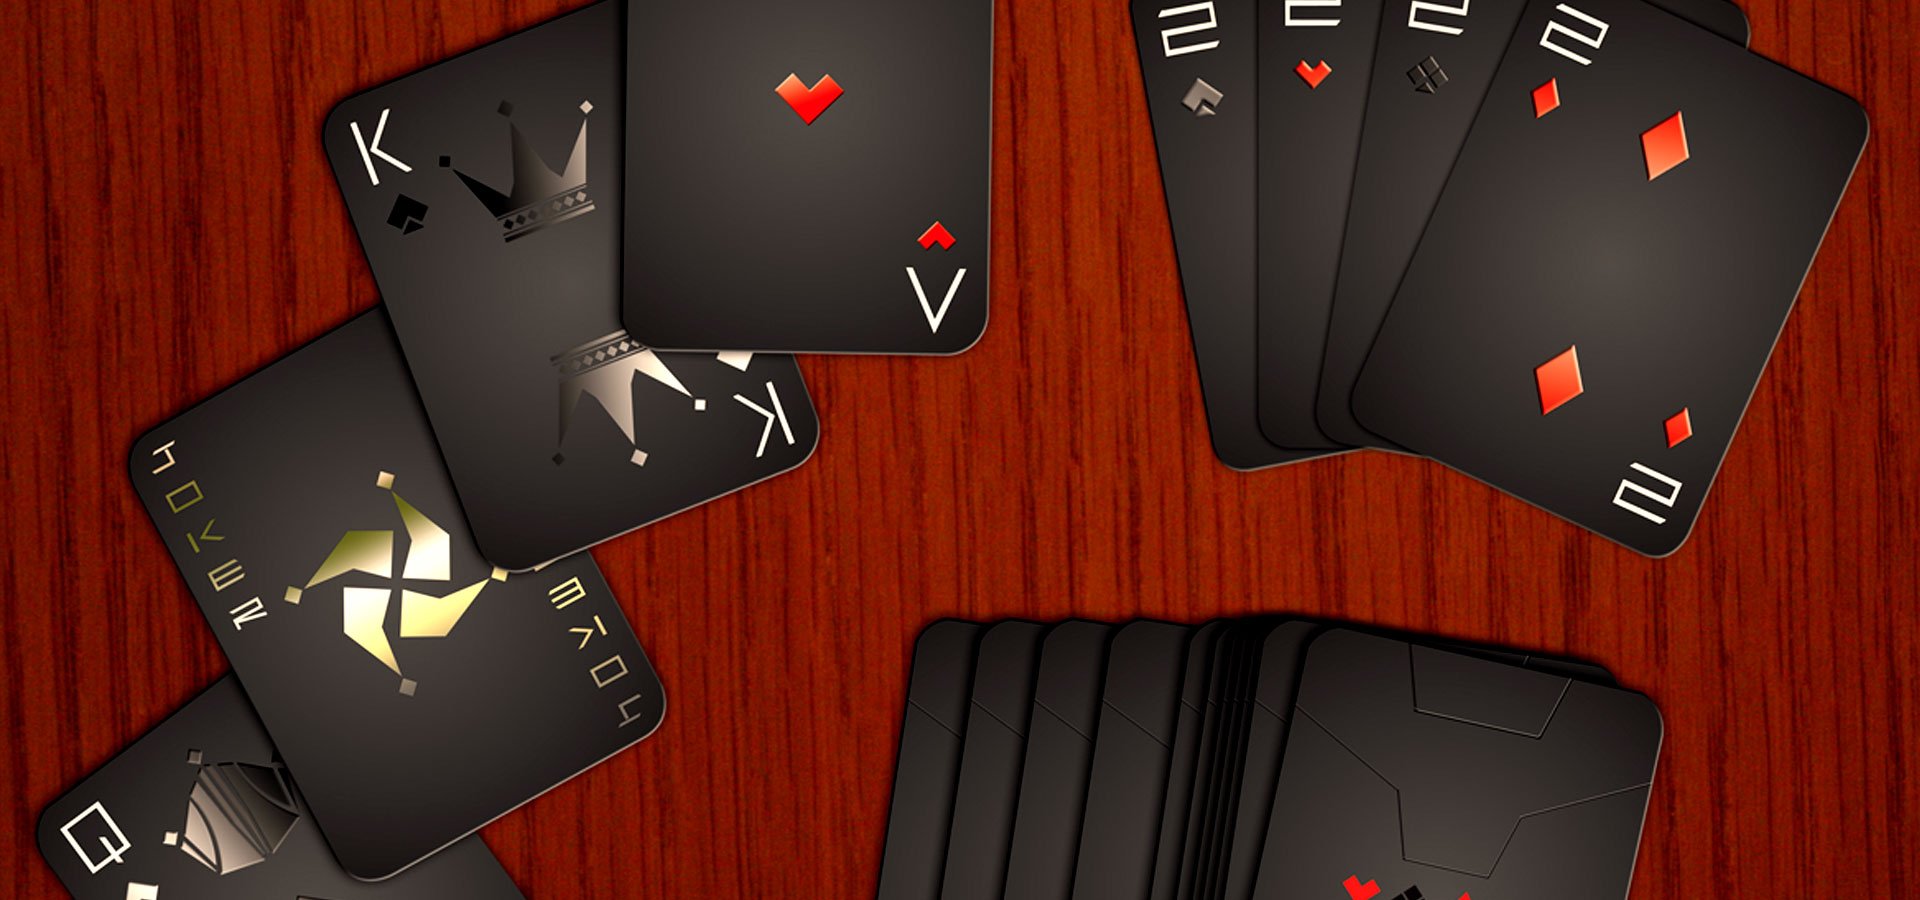 21+ Playing Card Designs  Free & Premium Templates Within Playing Card Design Template